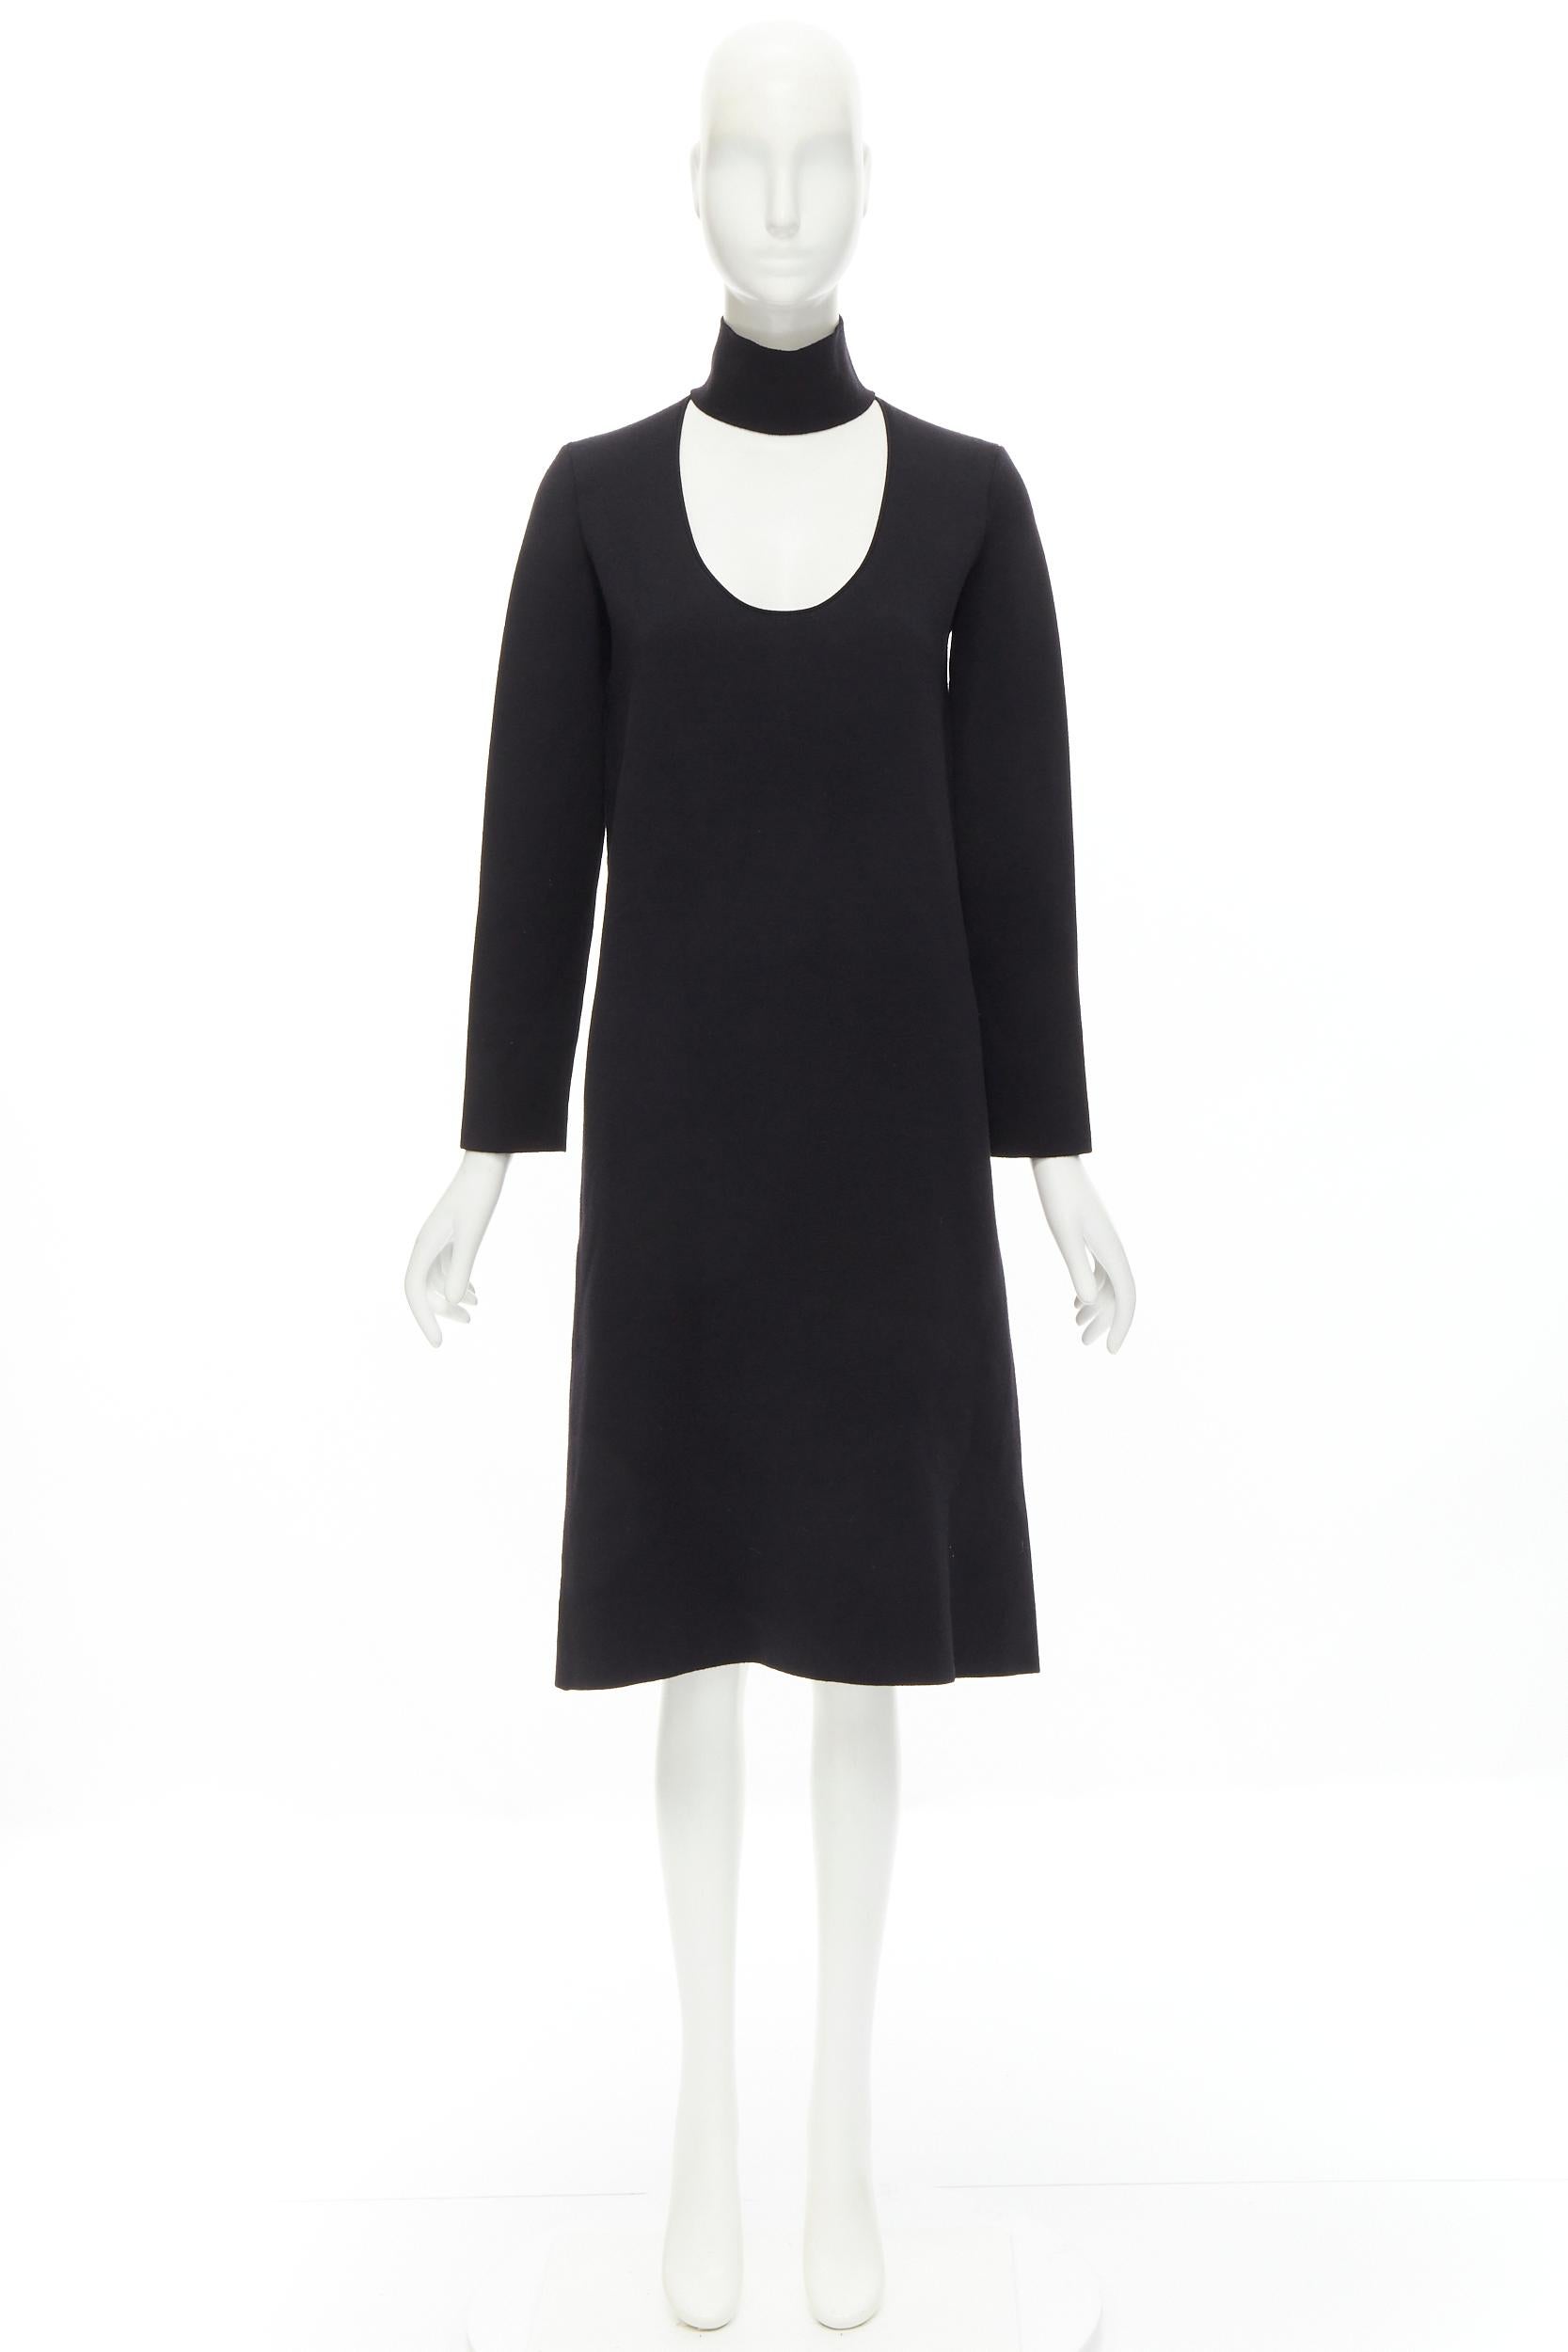 BOTTEGA VENETA 2019 Runway black thick wool blend cut out collar dress IT38 XS For Sale 2